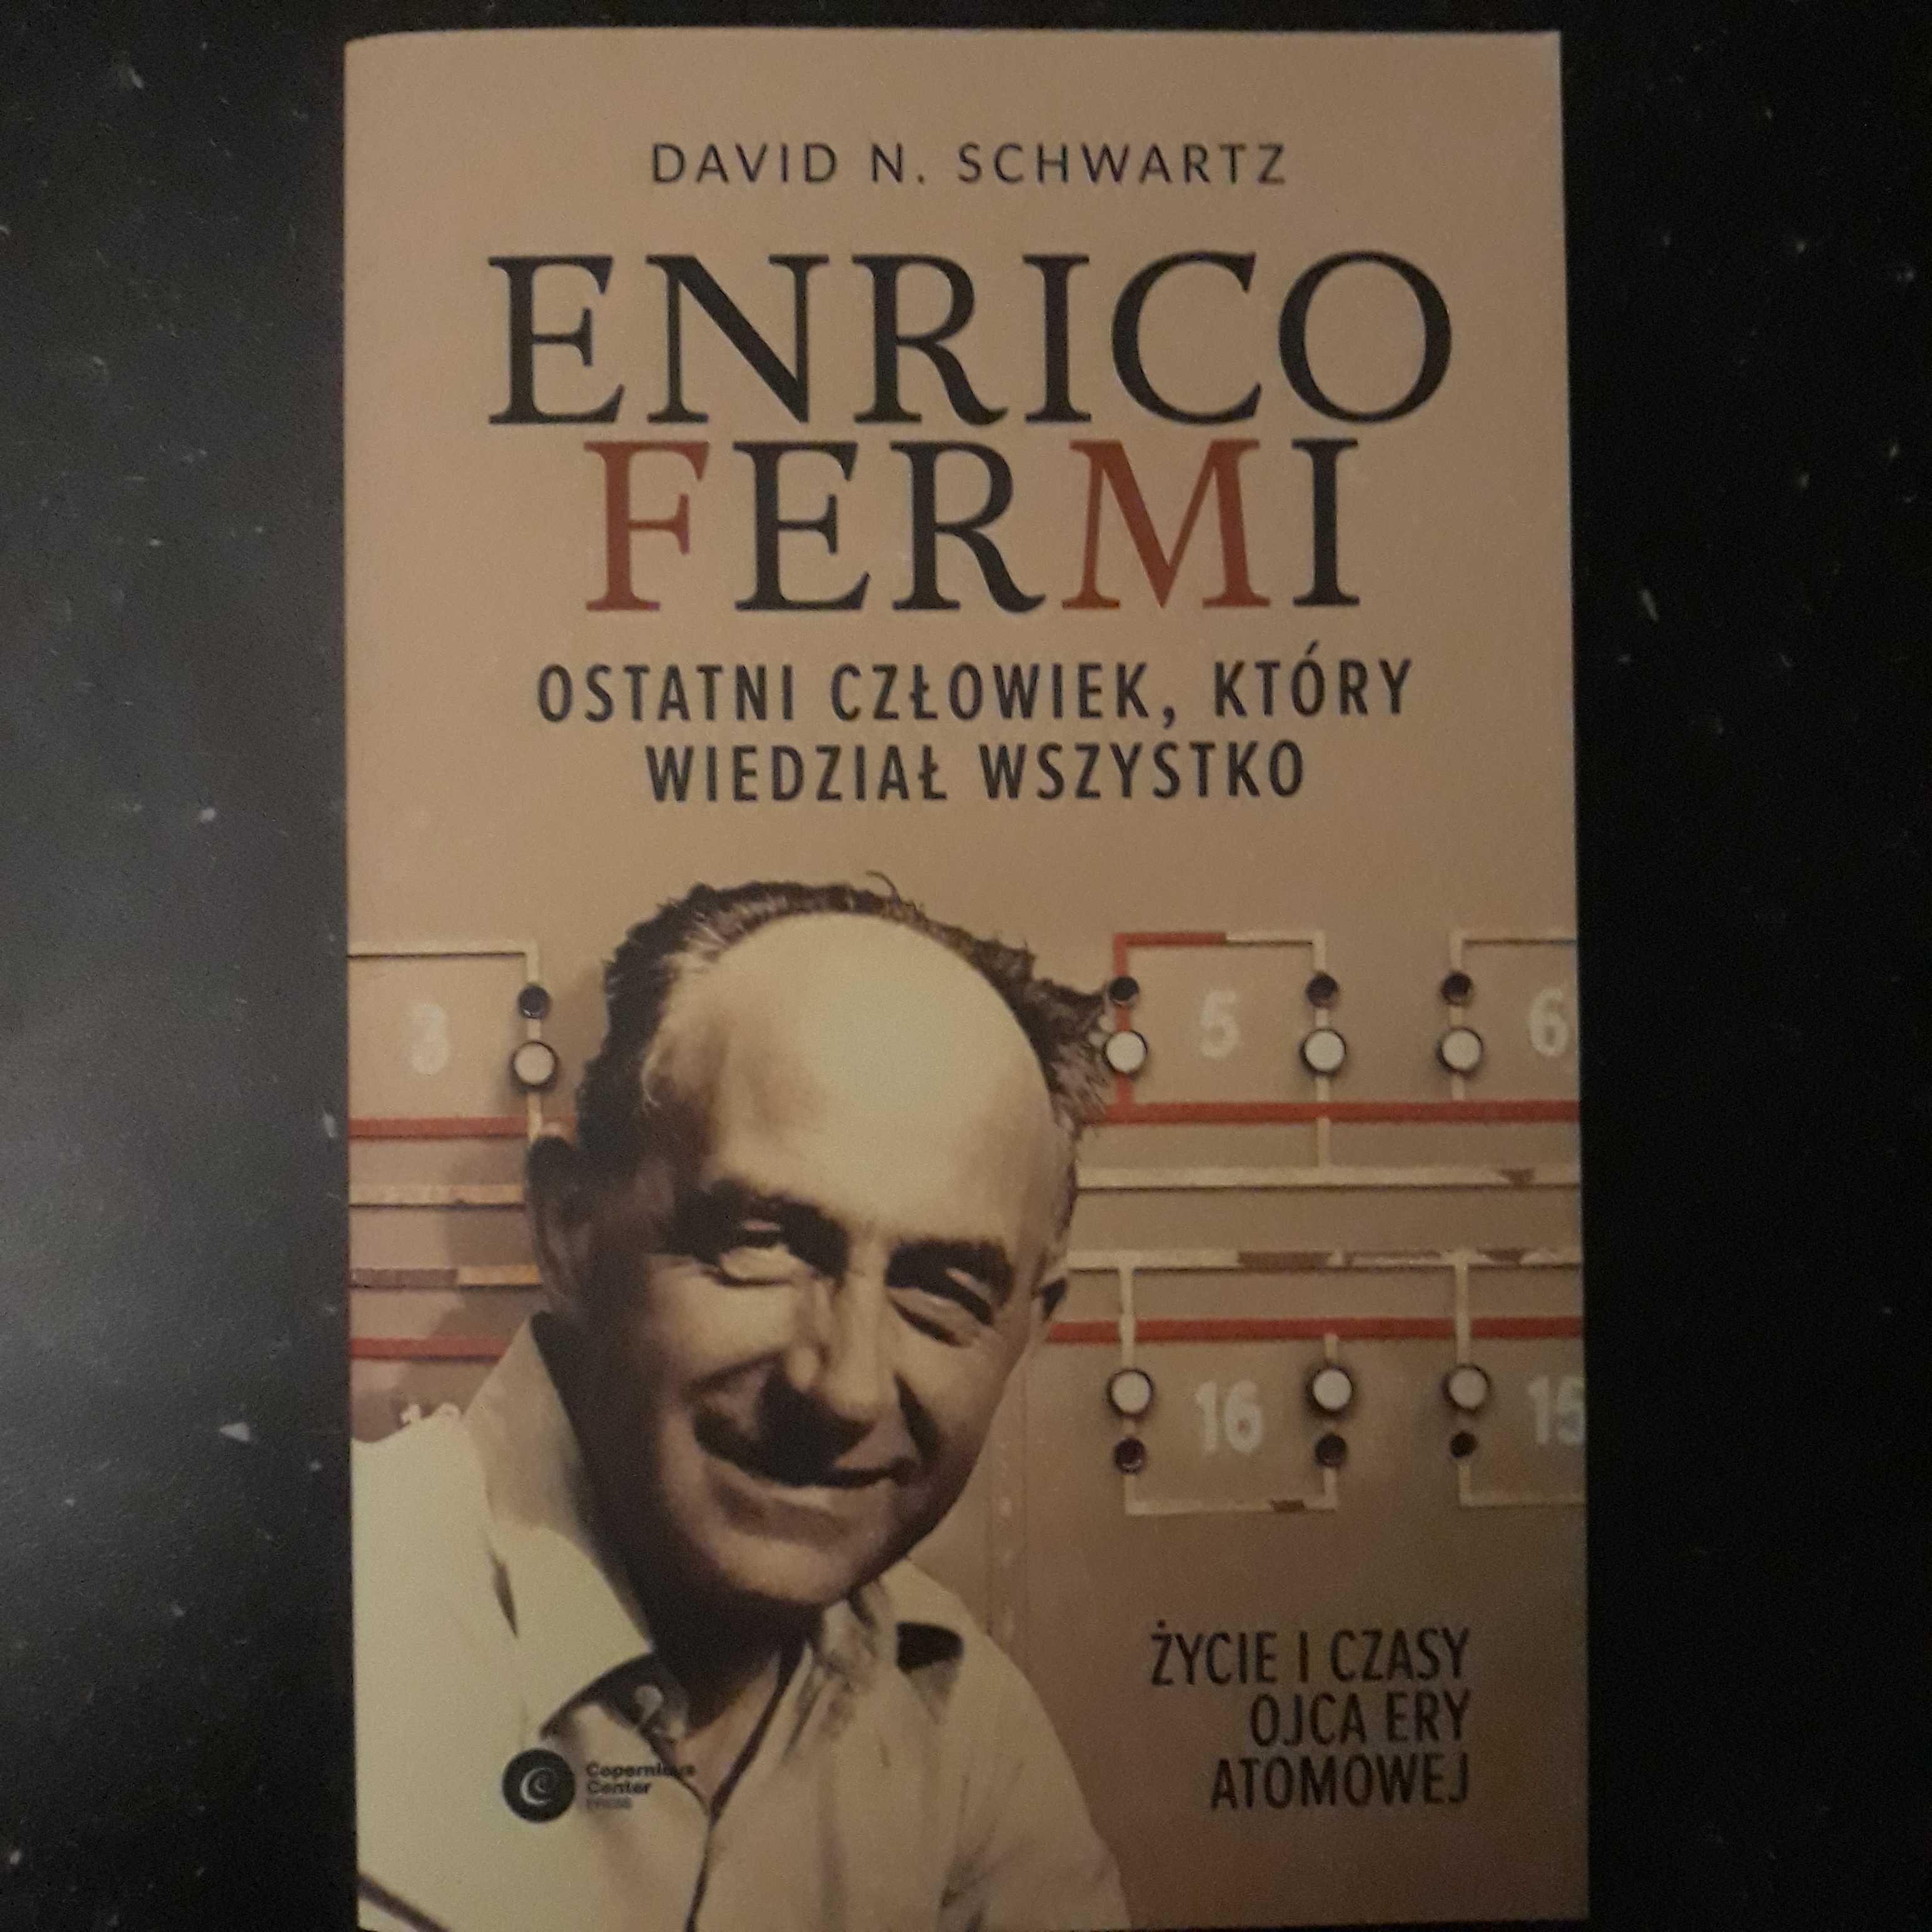 Enrico Fermi Schwartz